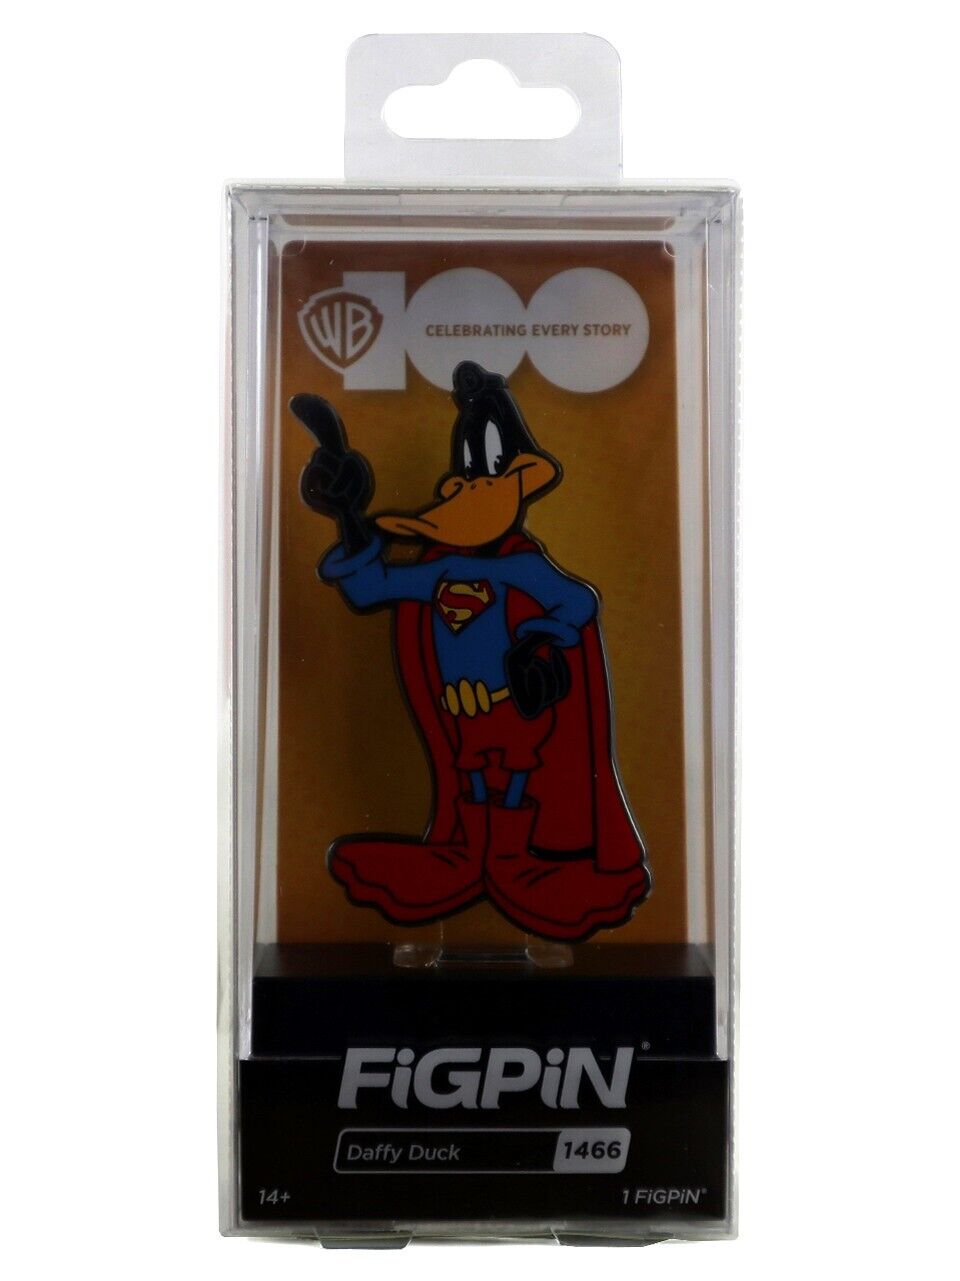 Figpin Looney Tunes Daffy Duck As Superman Enamel Pin #1466 Warner Bros WB100